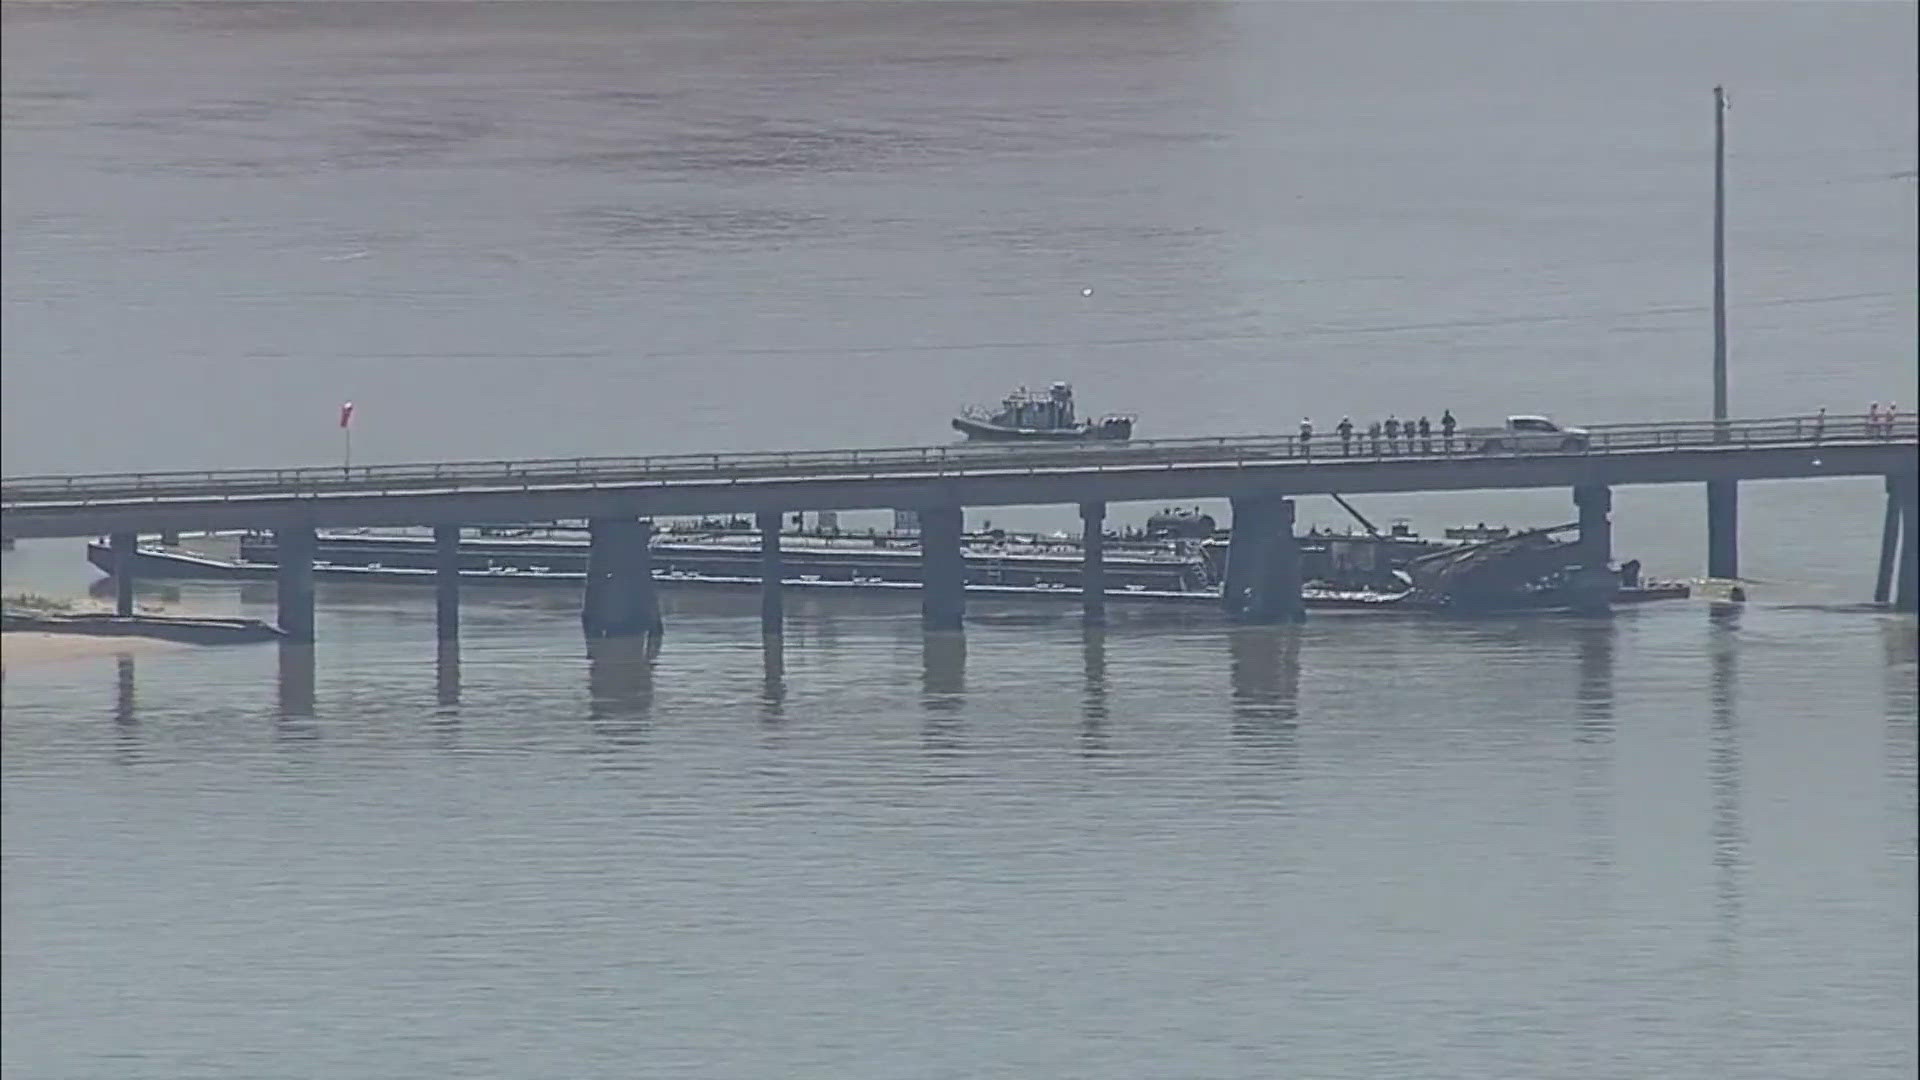 Chris Sadeghi has the latest on the Pelican Island bridge incident in Galveston.